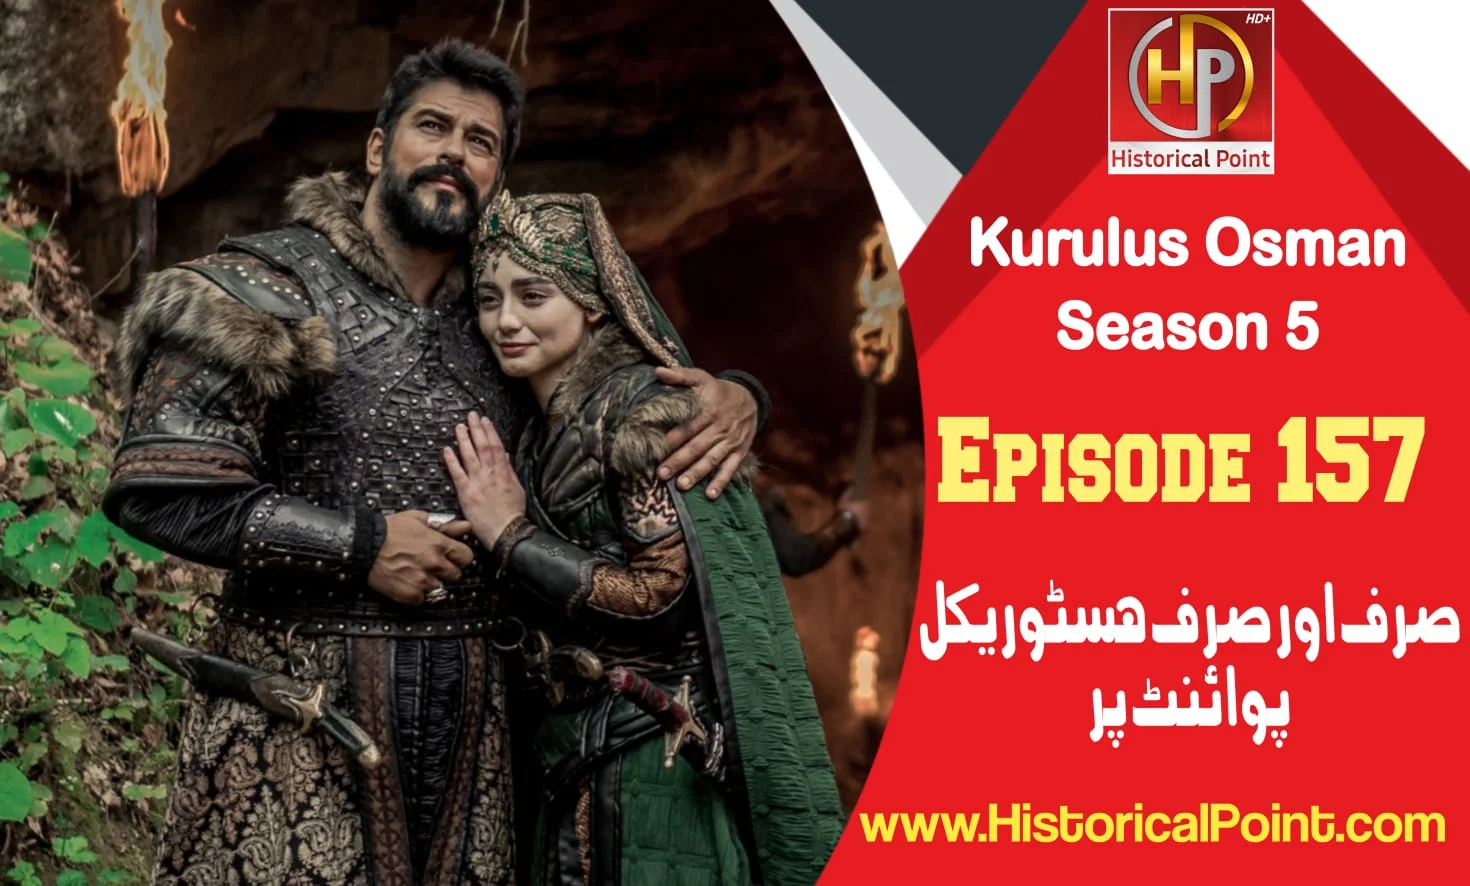 Kurulus Osman Episode 157 in Urdu Subtitles